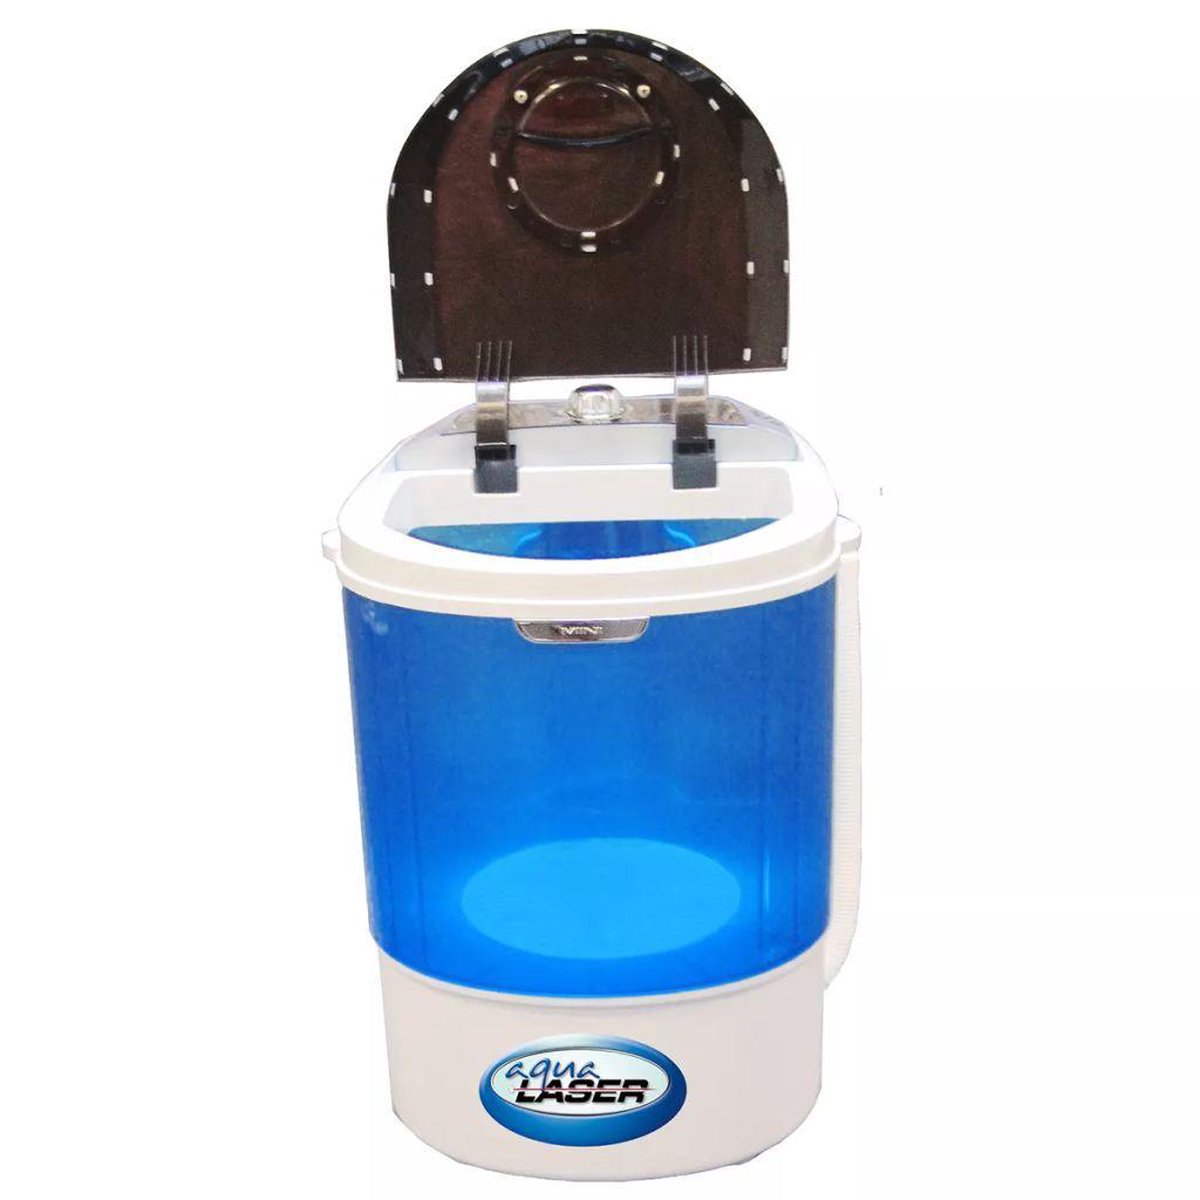 Aqua Laser mini lave-linge | bol.com